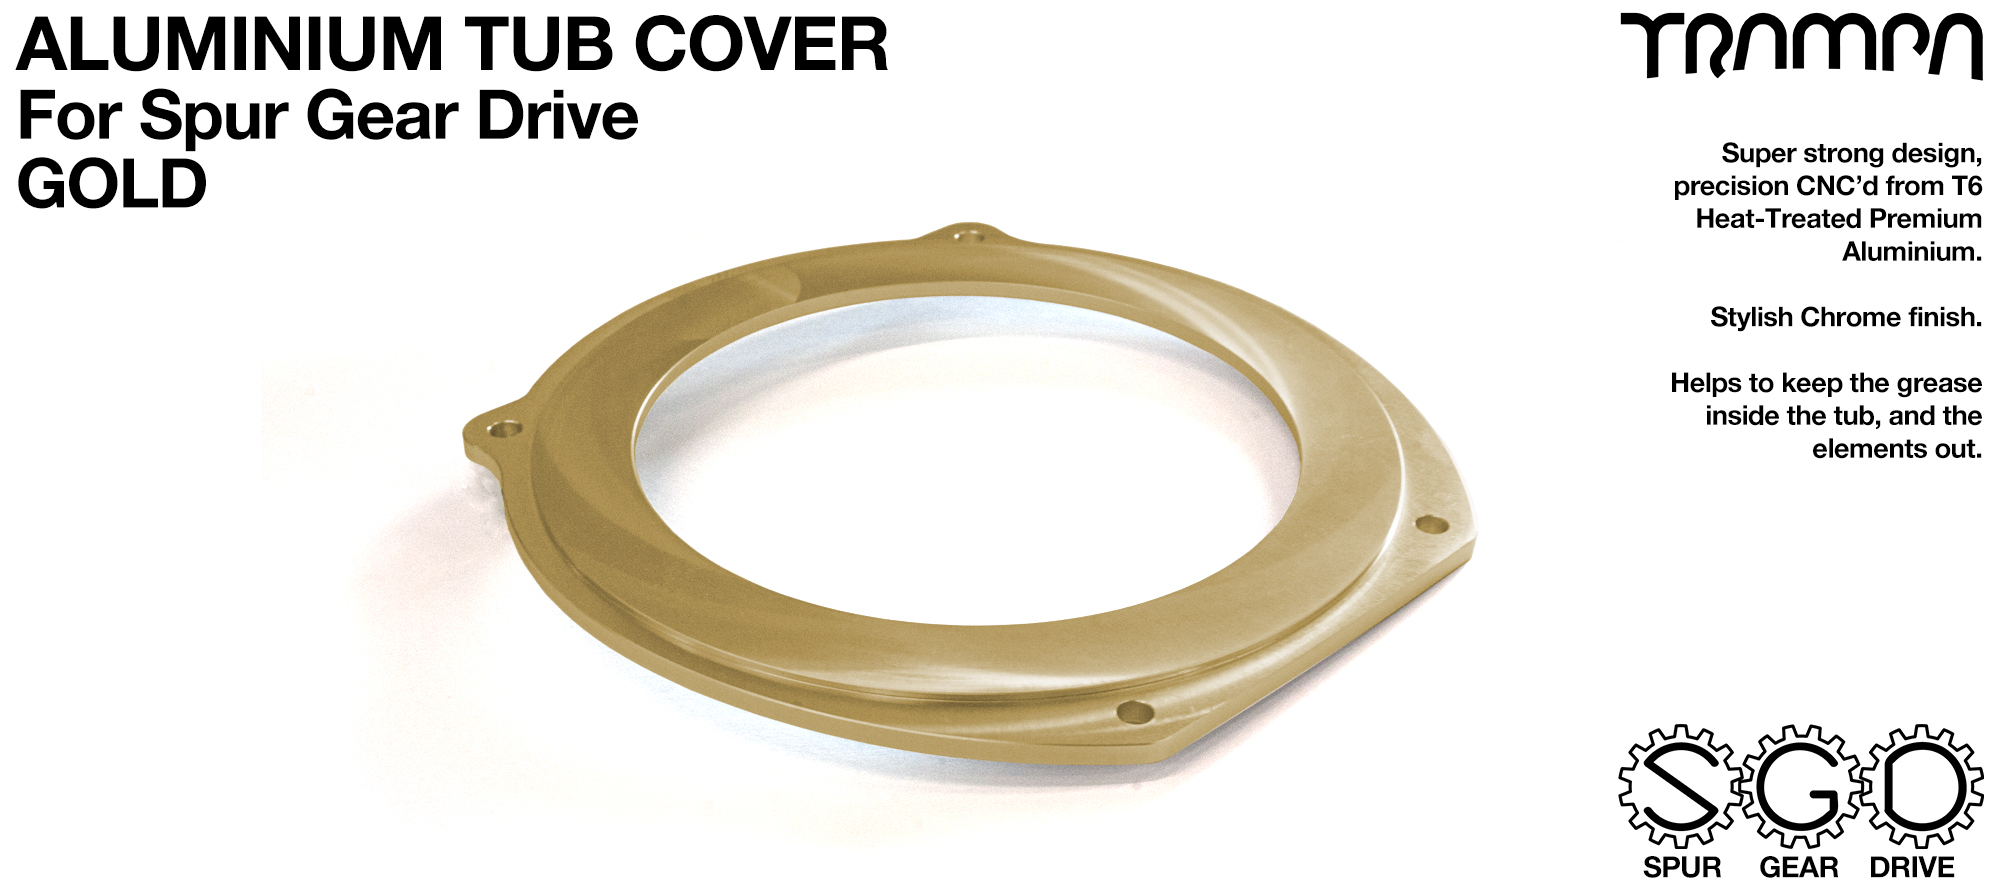 TRAMPA SPUR Gear Drive T6 Aluminium Tub Cover - GOLD